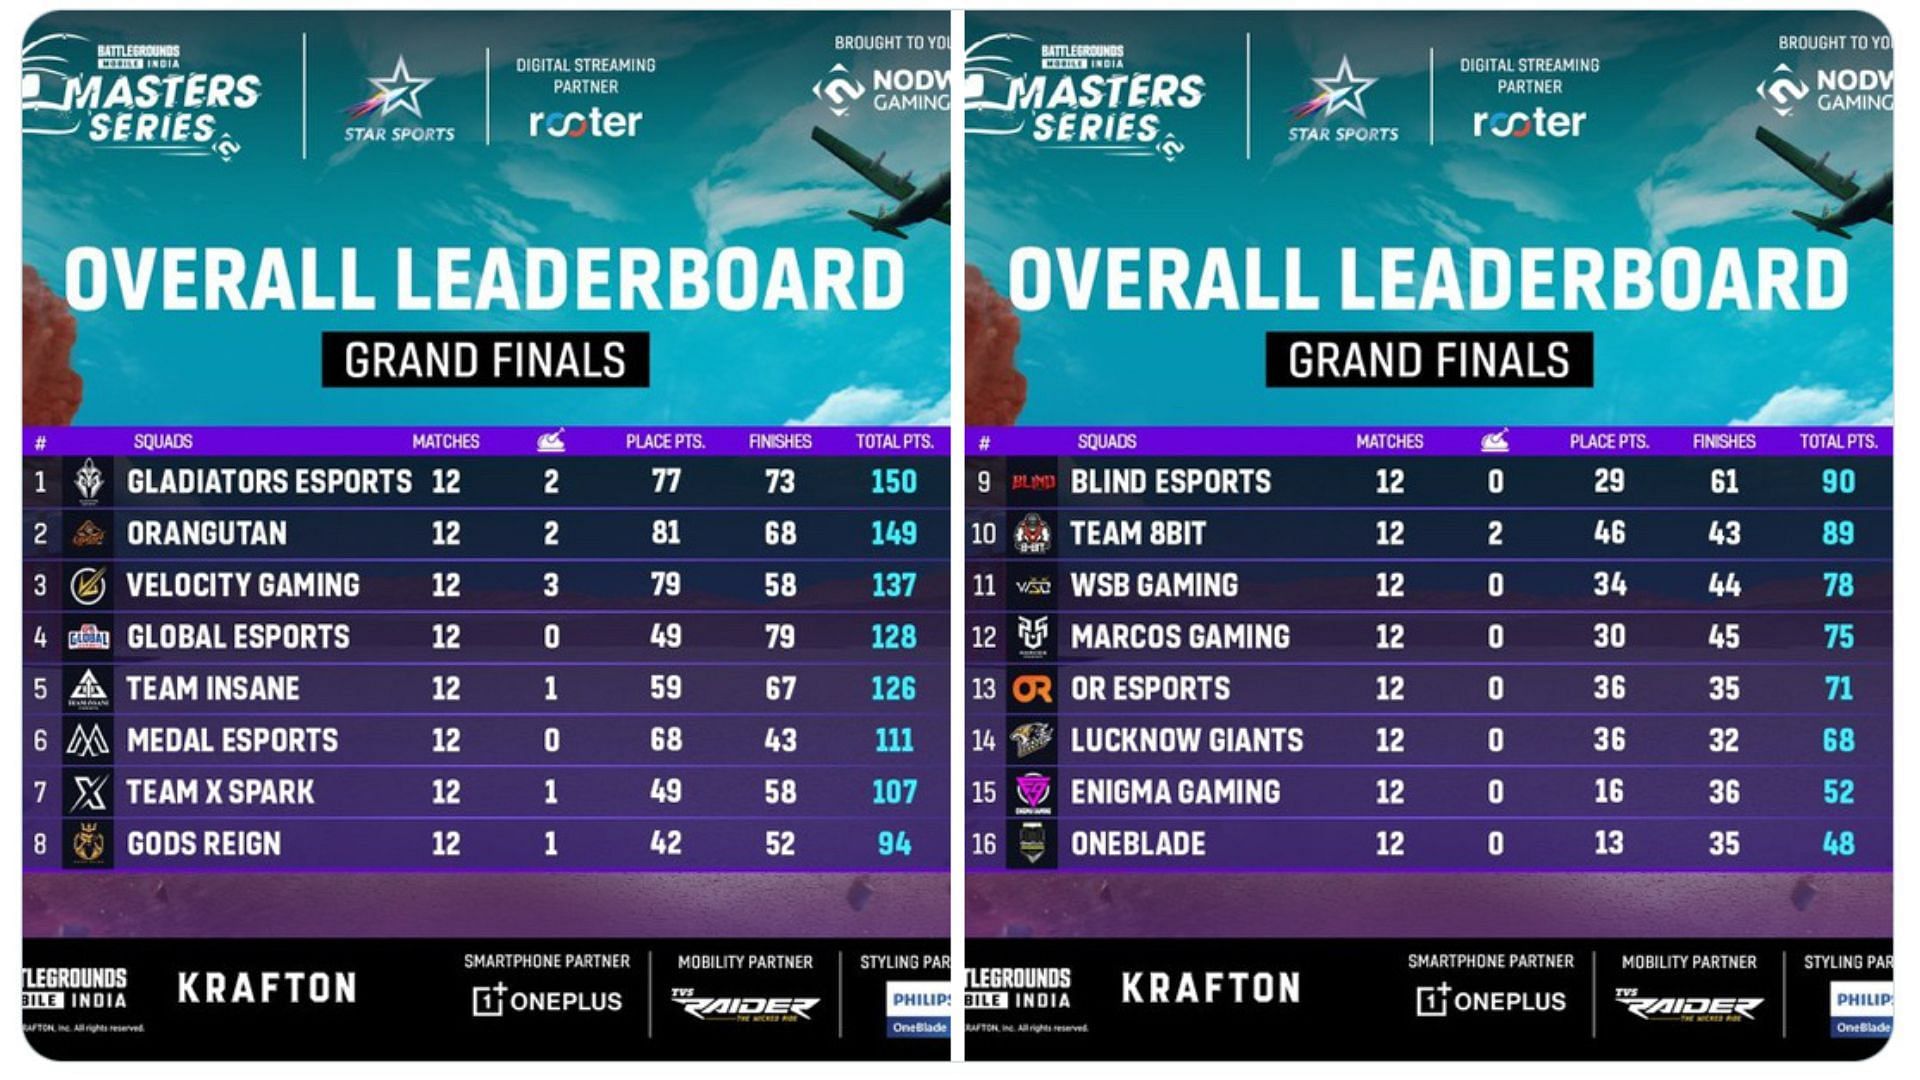 Grand Finals rankings of BGMI Masters Series (Image via Nodwin Gaming)